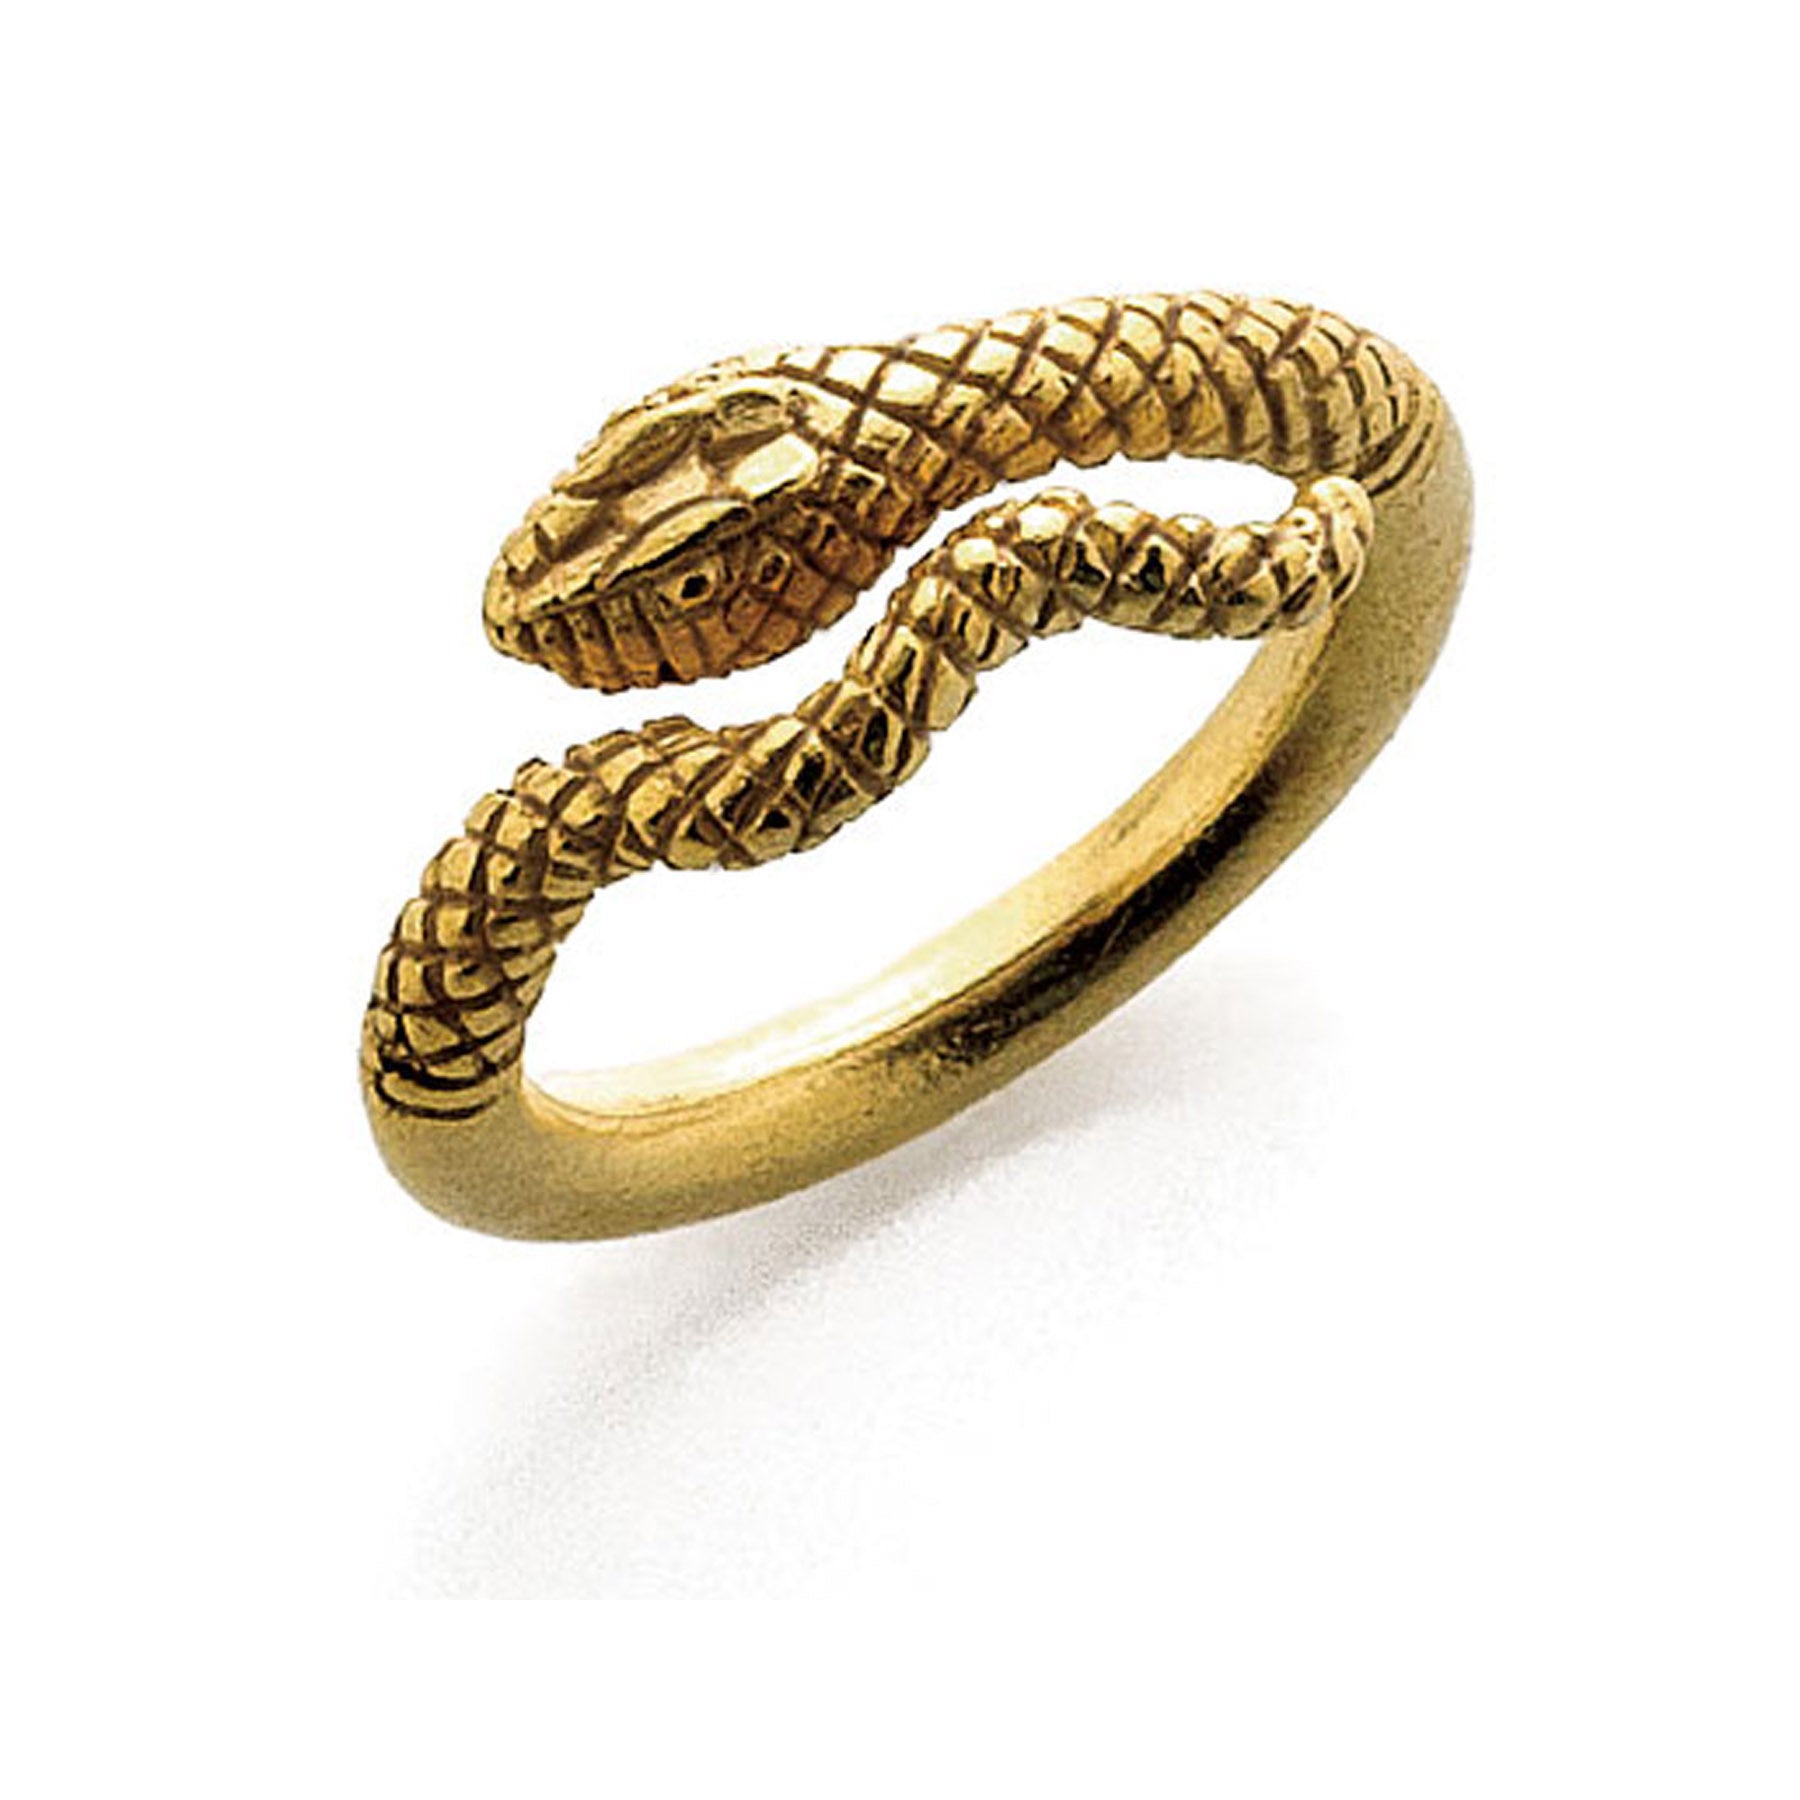 Buy Medium Golden Snake Ring Online - Accessorize India